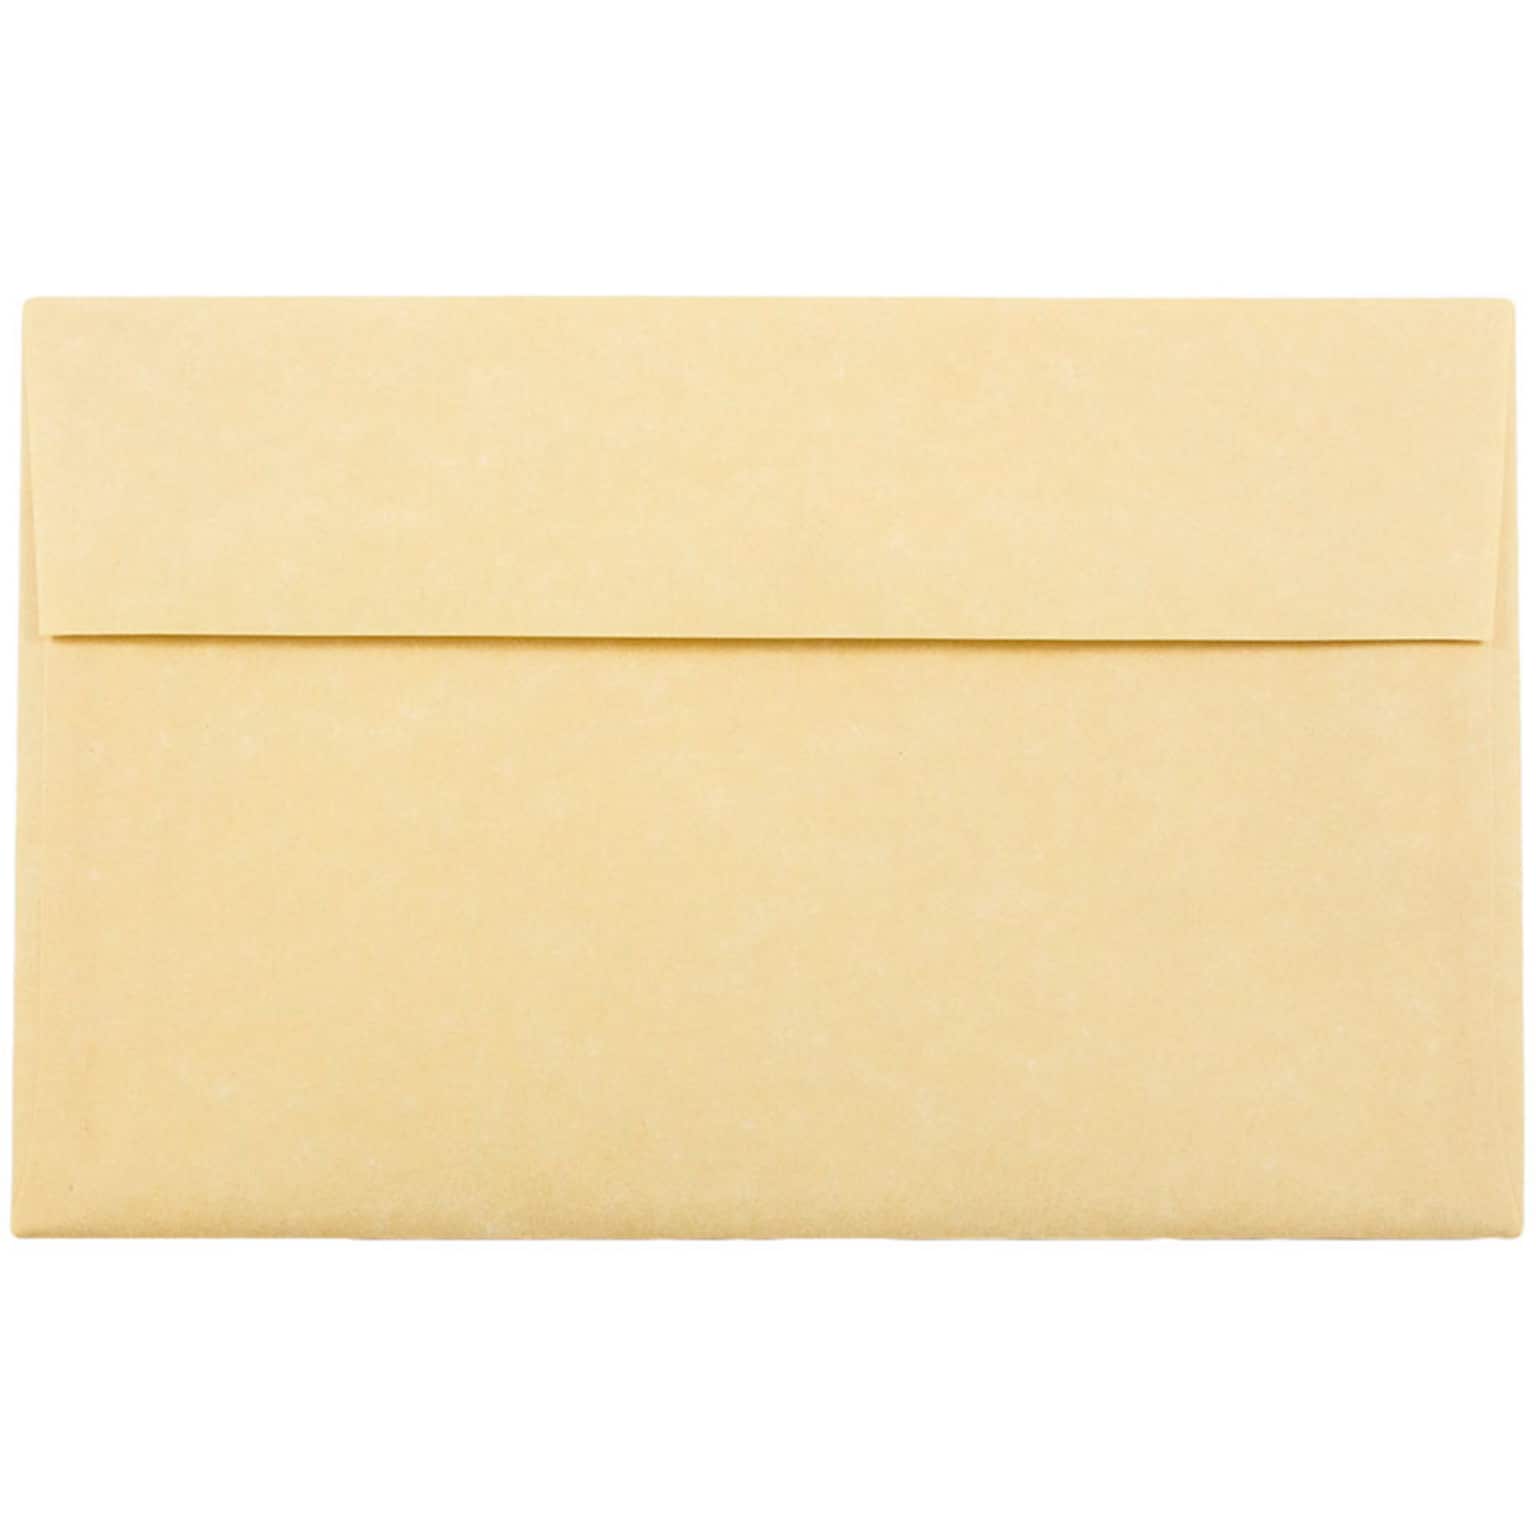 JAM Paper A10 Parchment Invitation Envelopes, 6 x 9.5, Antique Gold Recycled, 25/Pack (12514)